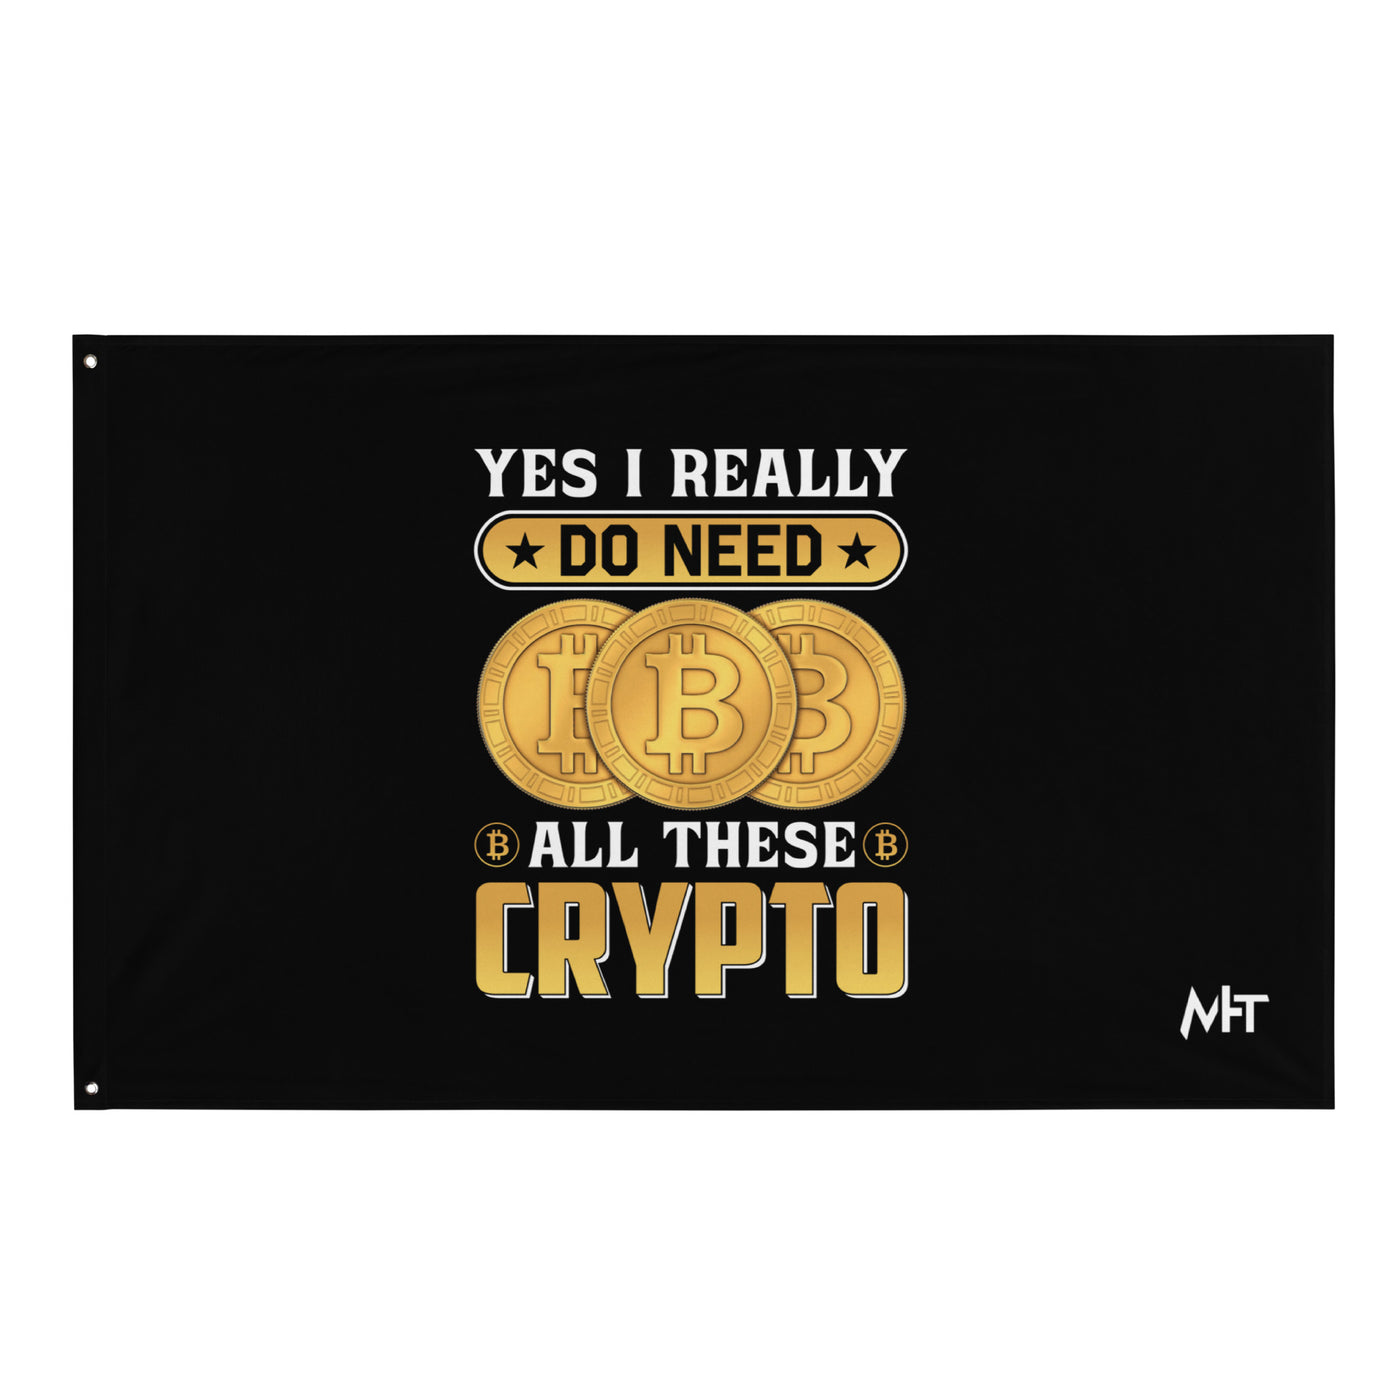 Yes, I really Do Need all these Bitcoin - Flag